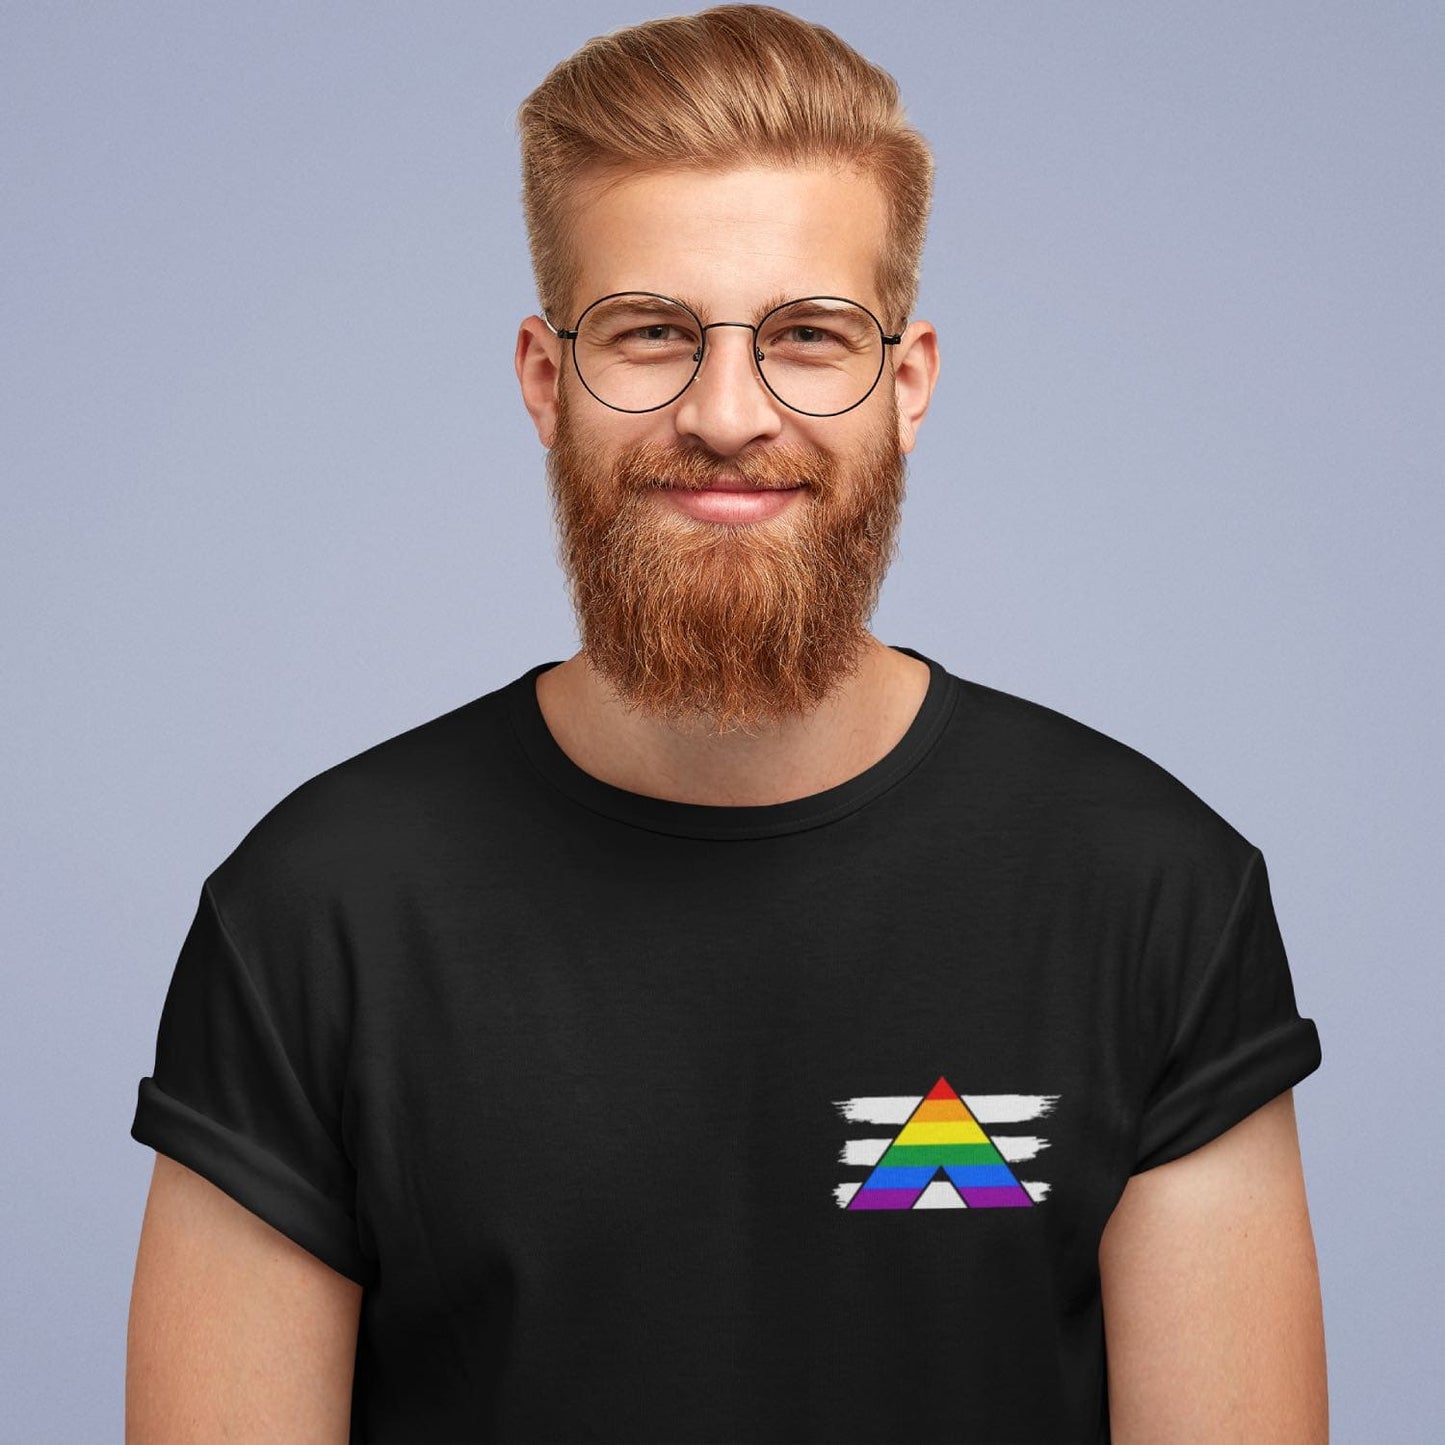 LGBTQ ally pride shirt, pocket design tee, in use